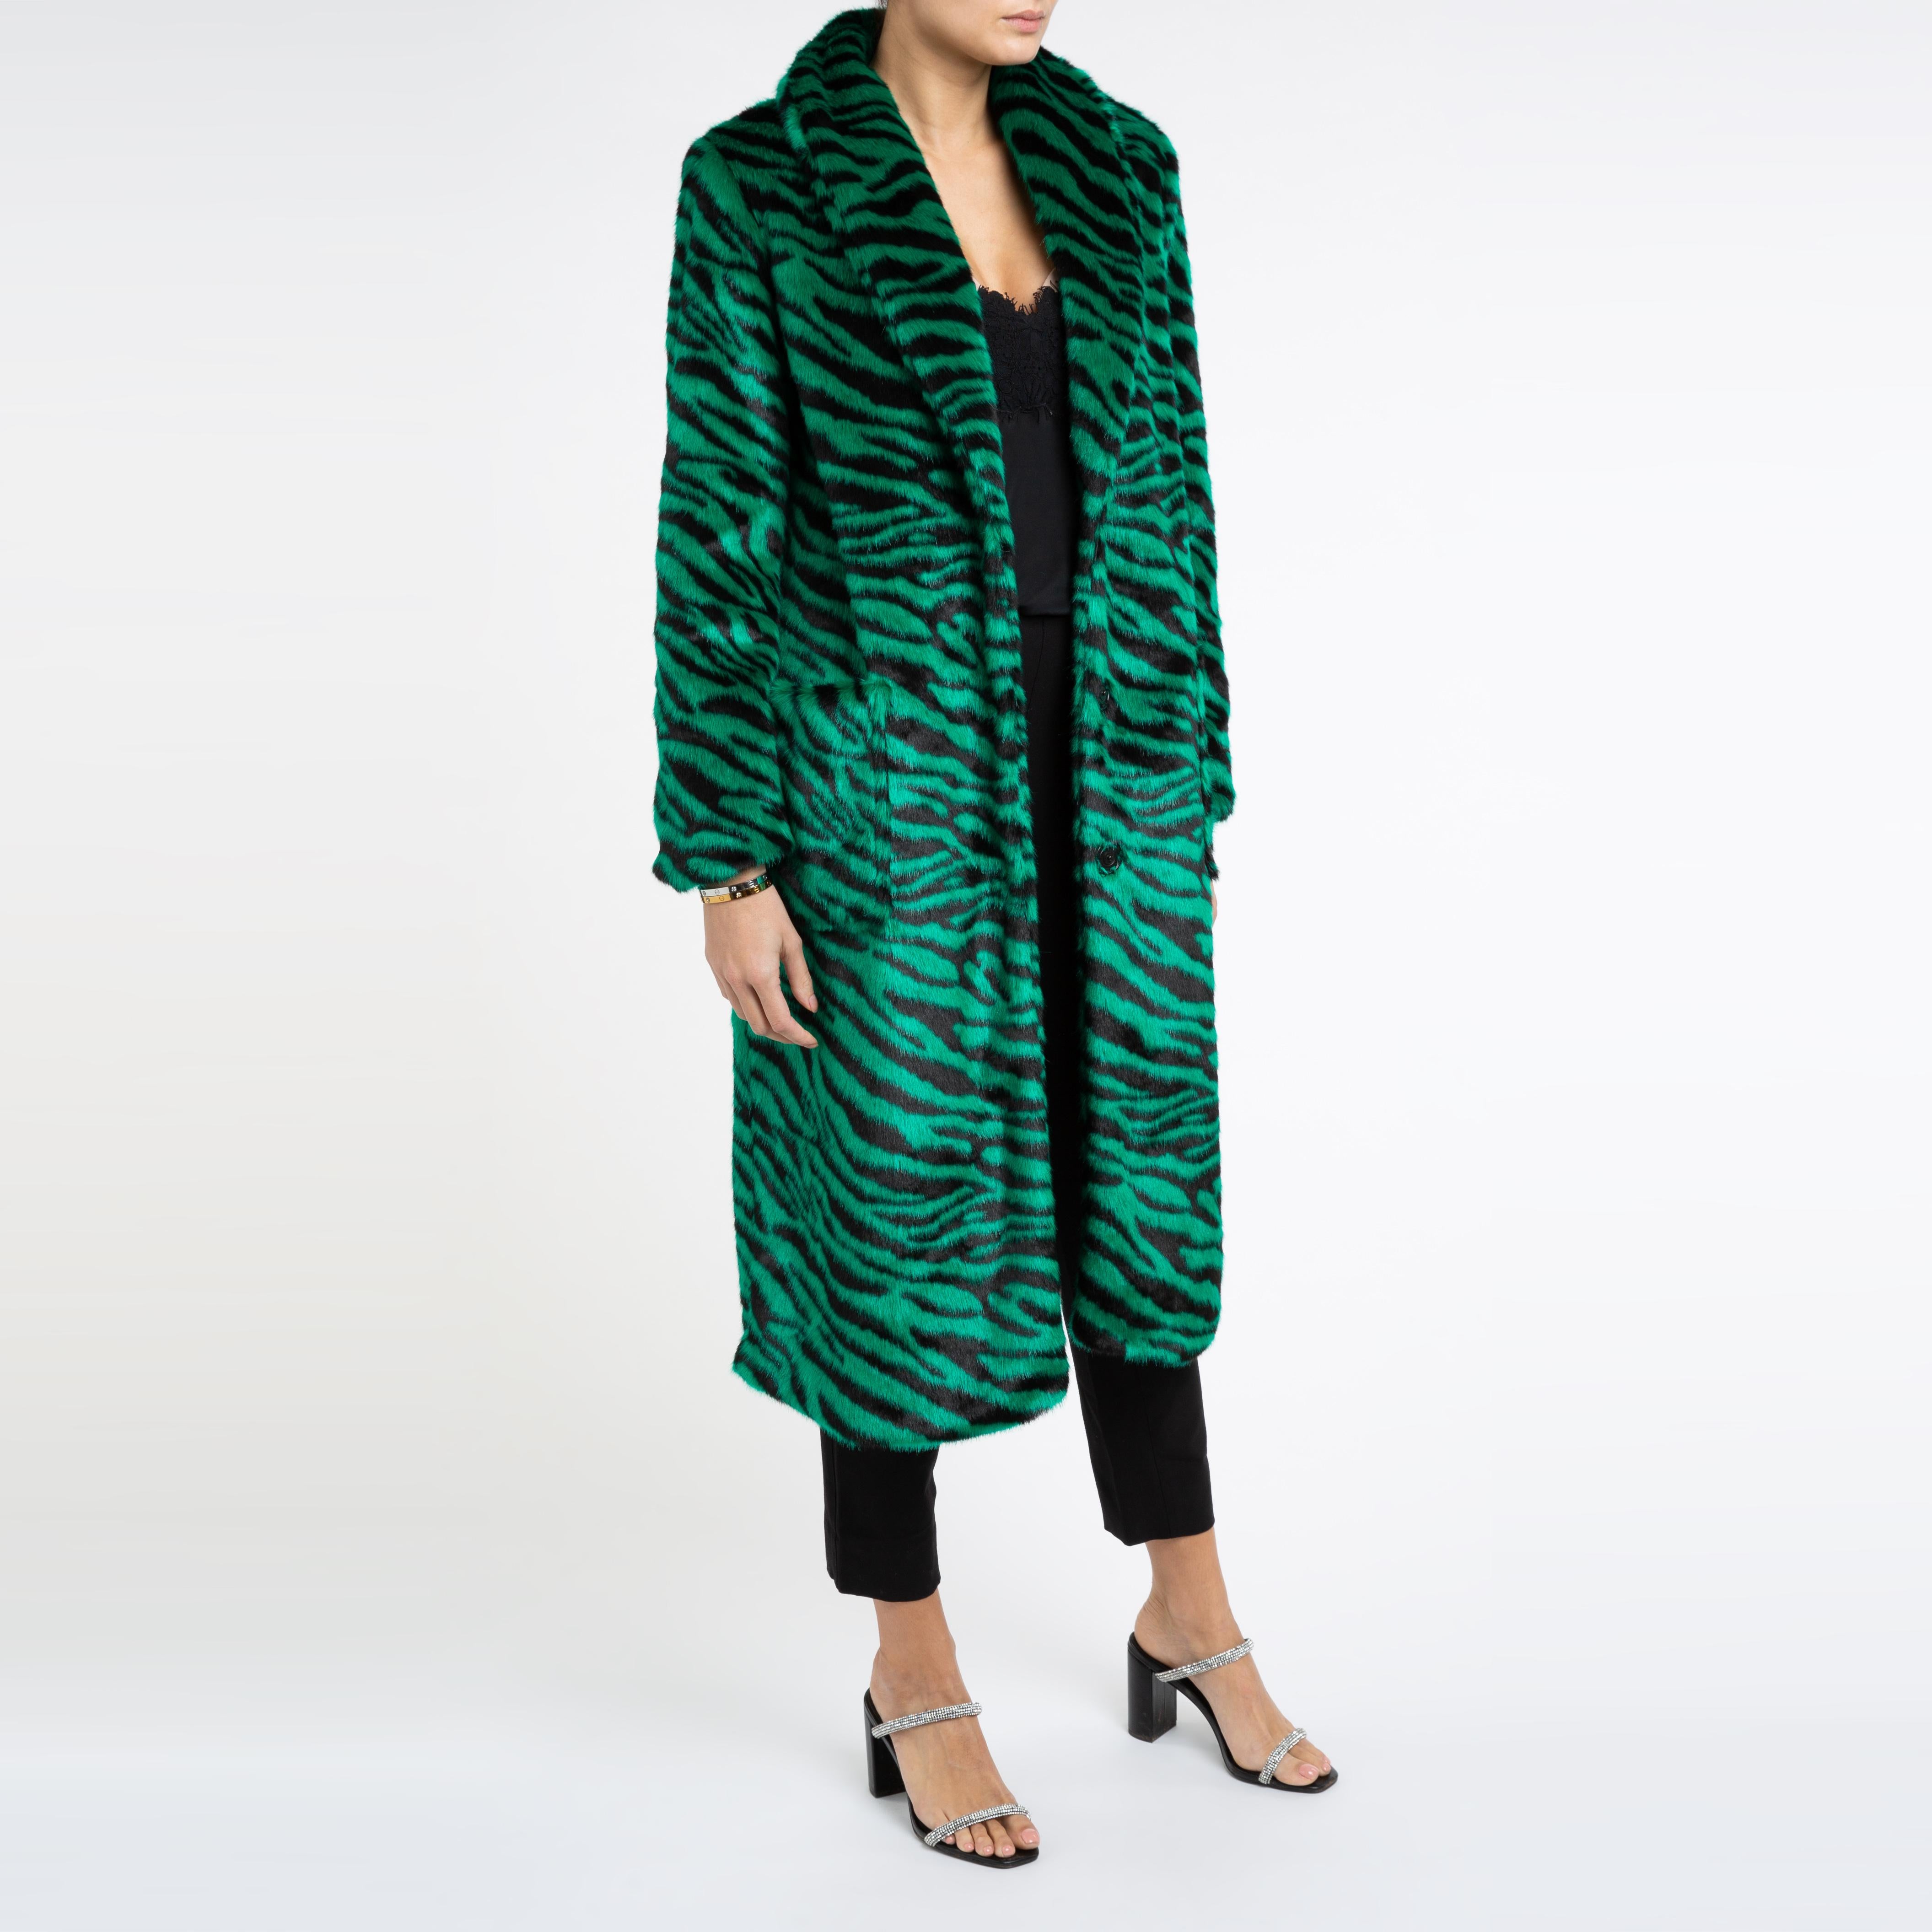 Women's Verheyen London Esmeralda Faux Fur Coat in Emerald Green Zebra Print size uk 12 For Sale